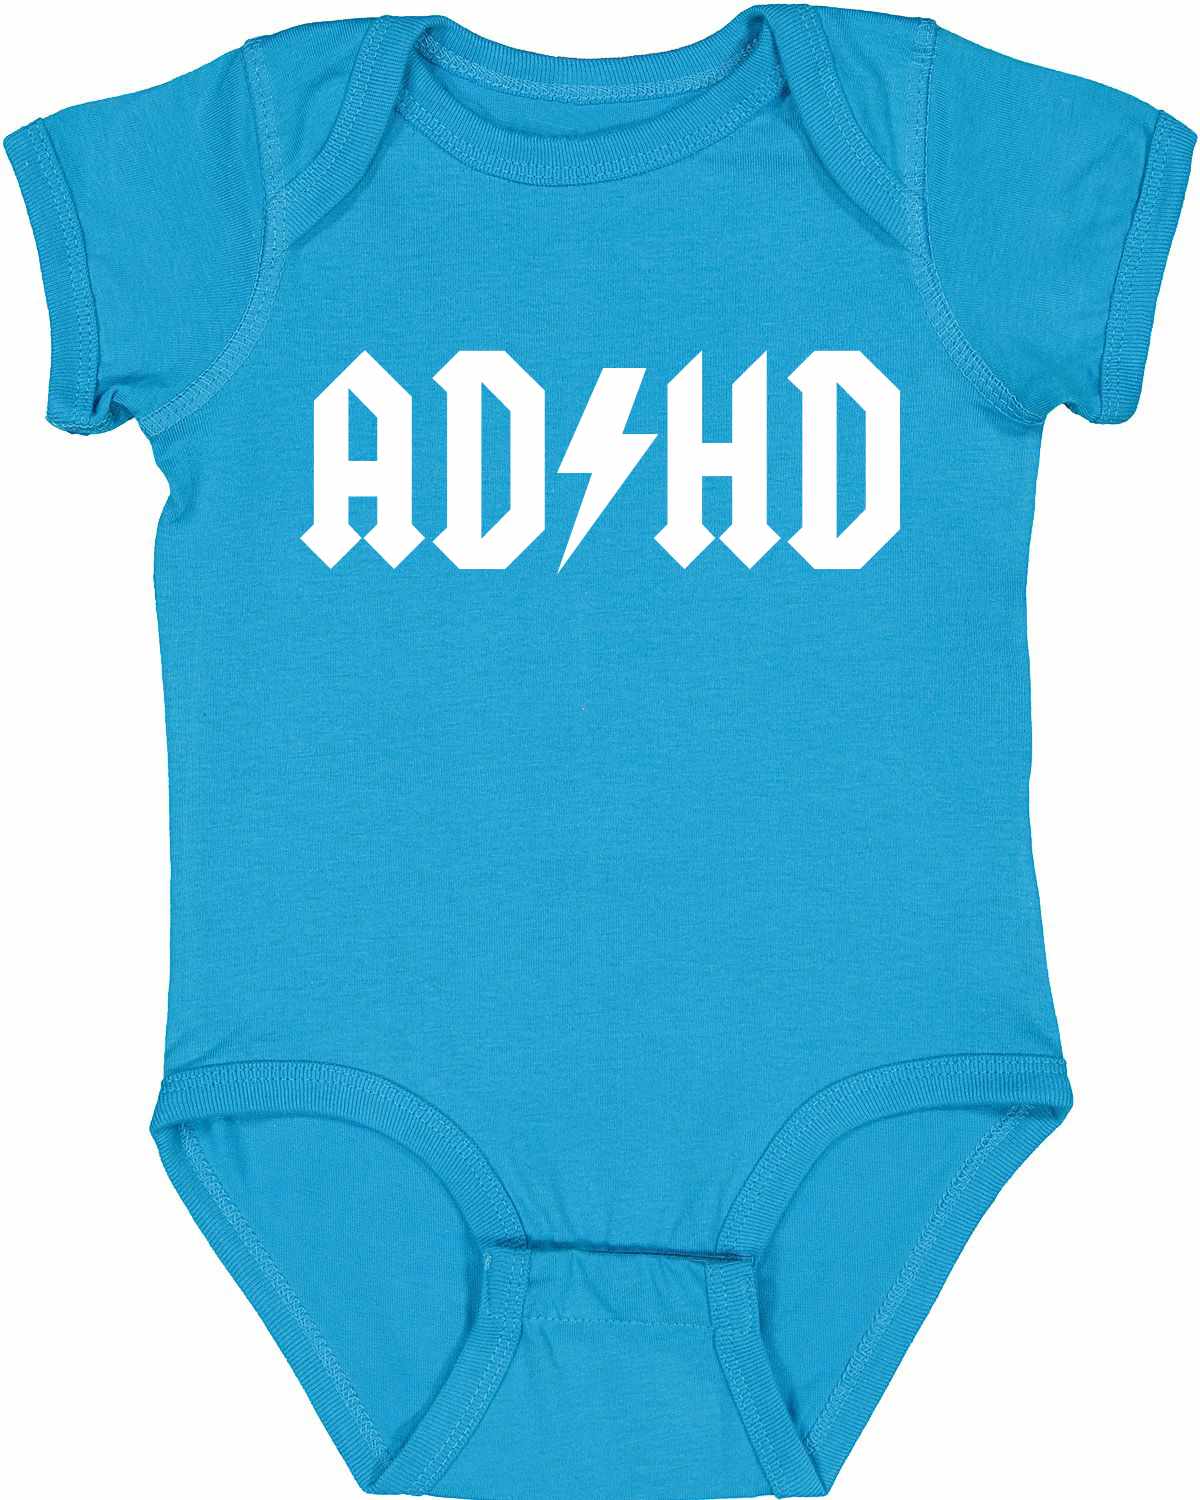 ADHD on Infant BodySuit (#828-10)